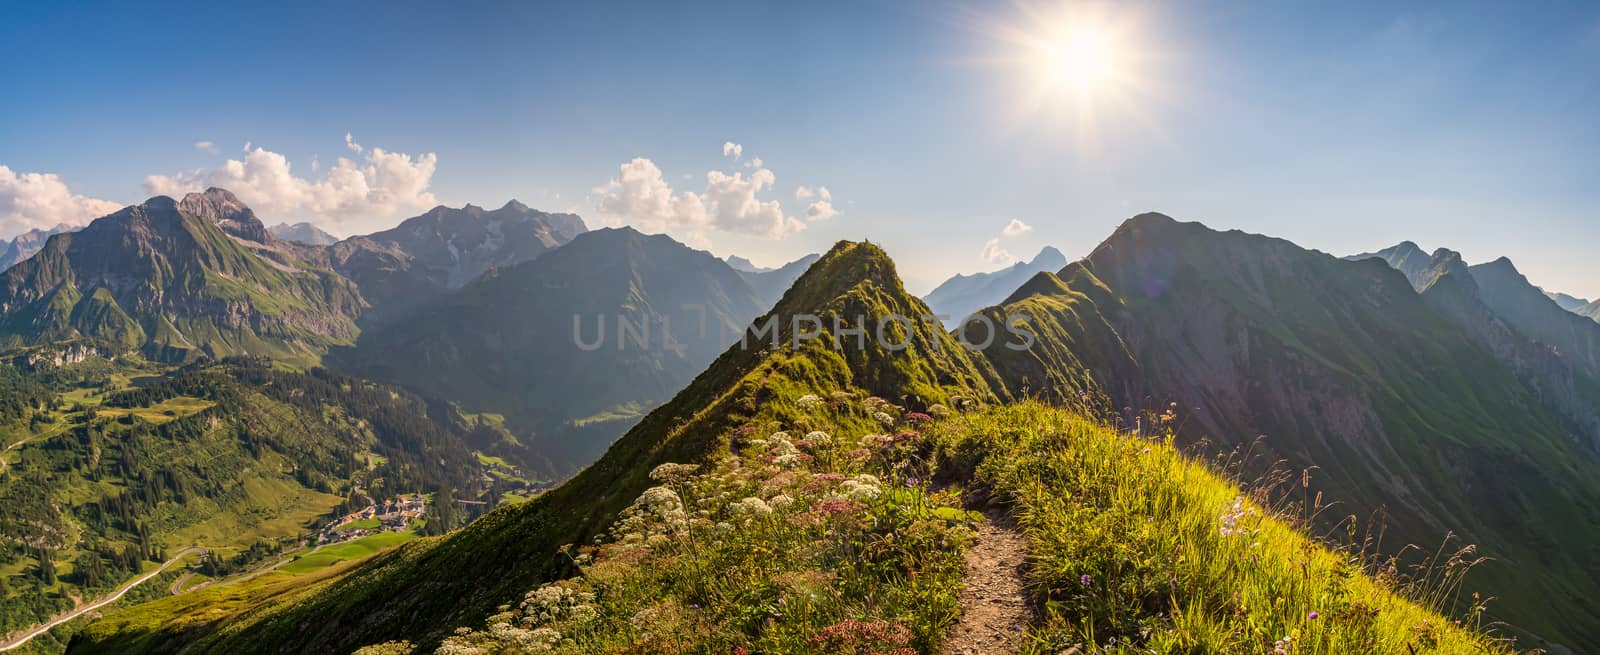 Sunset tour in the Kleinwalsertal Allgau Alps by mindscapephotos